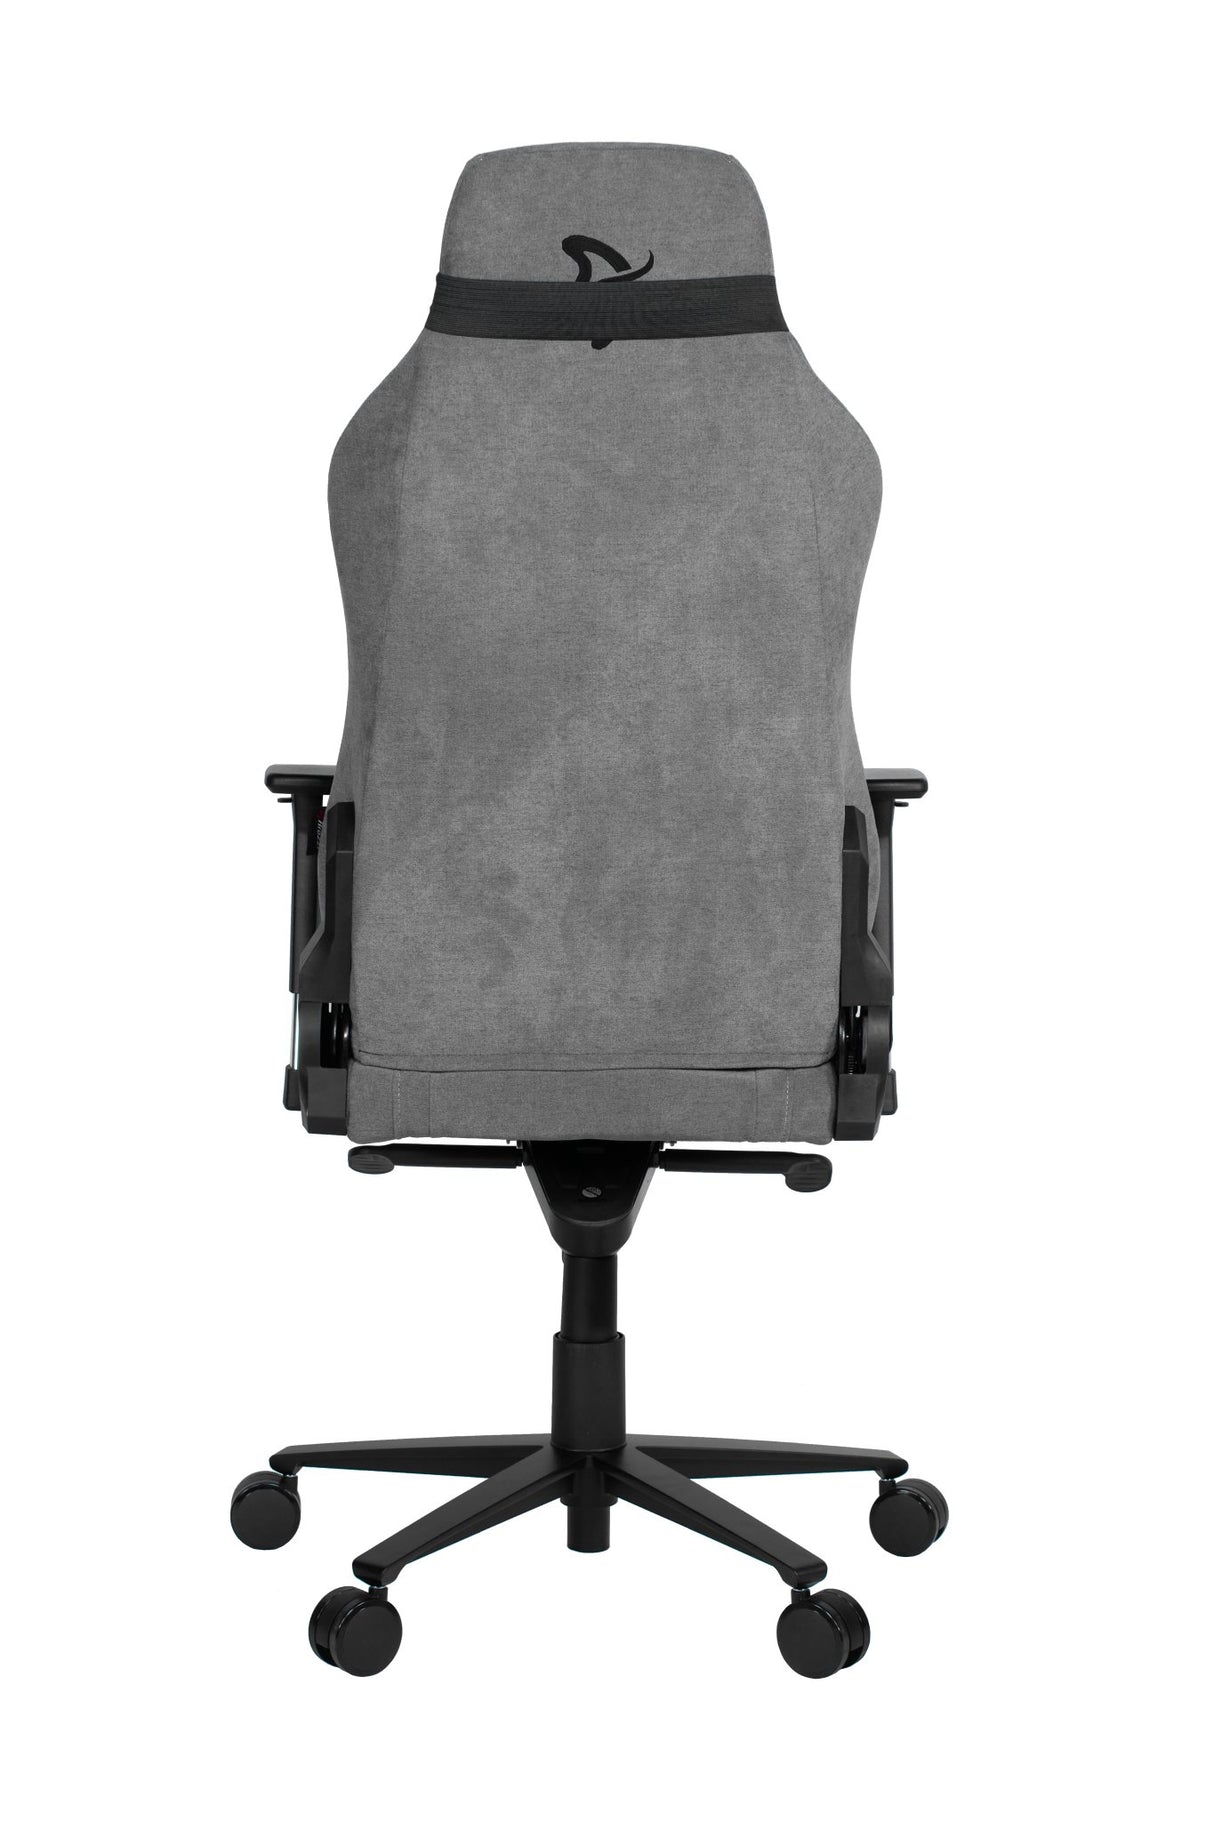 Arozzi Vernazza Soft Fabric - Ash - Level UpArozziGaming Chair0769498680025